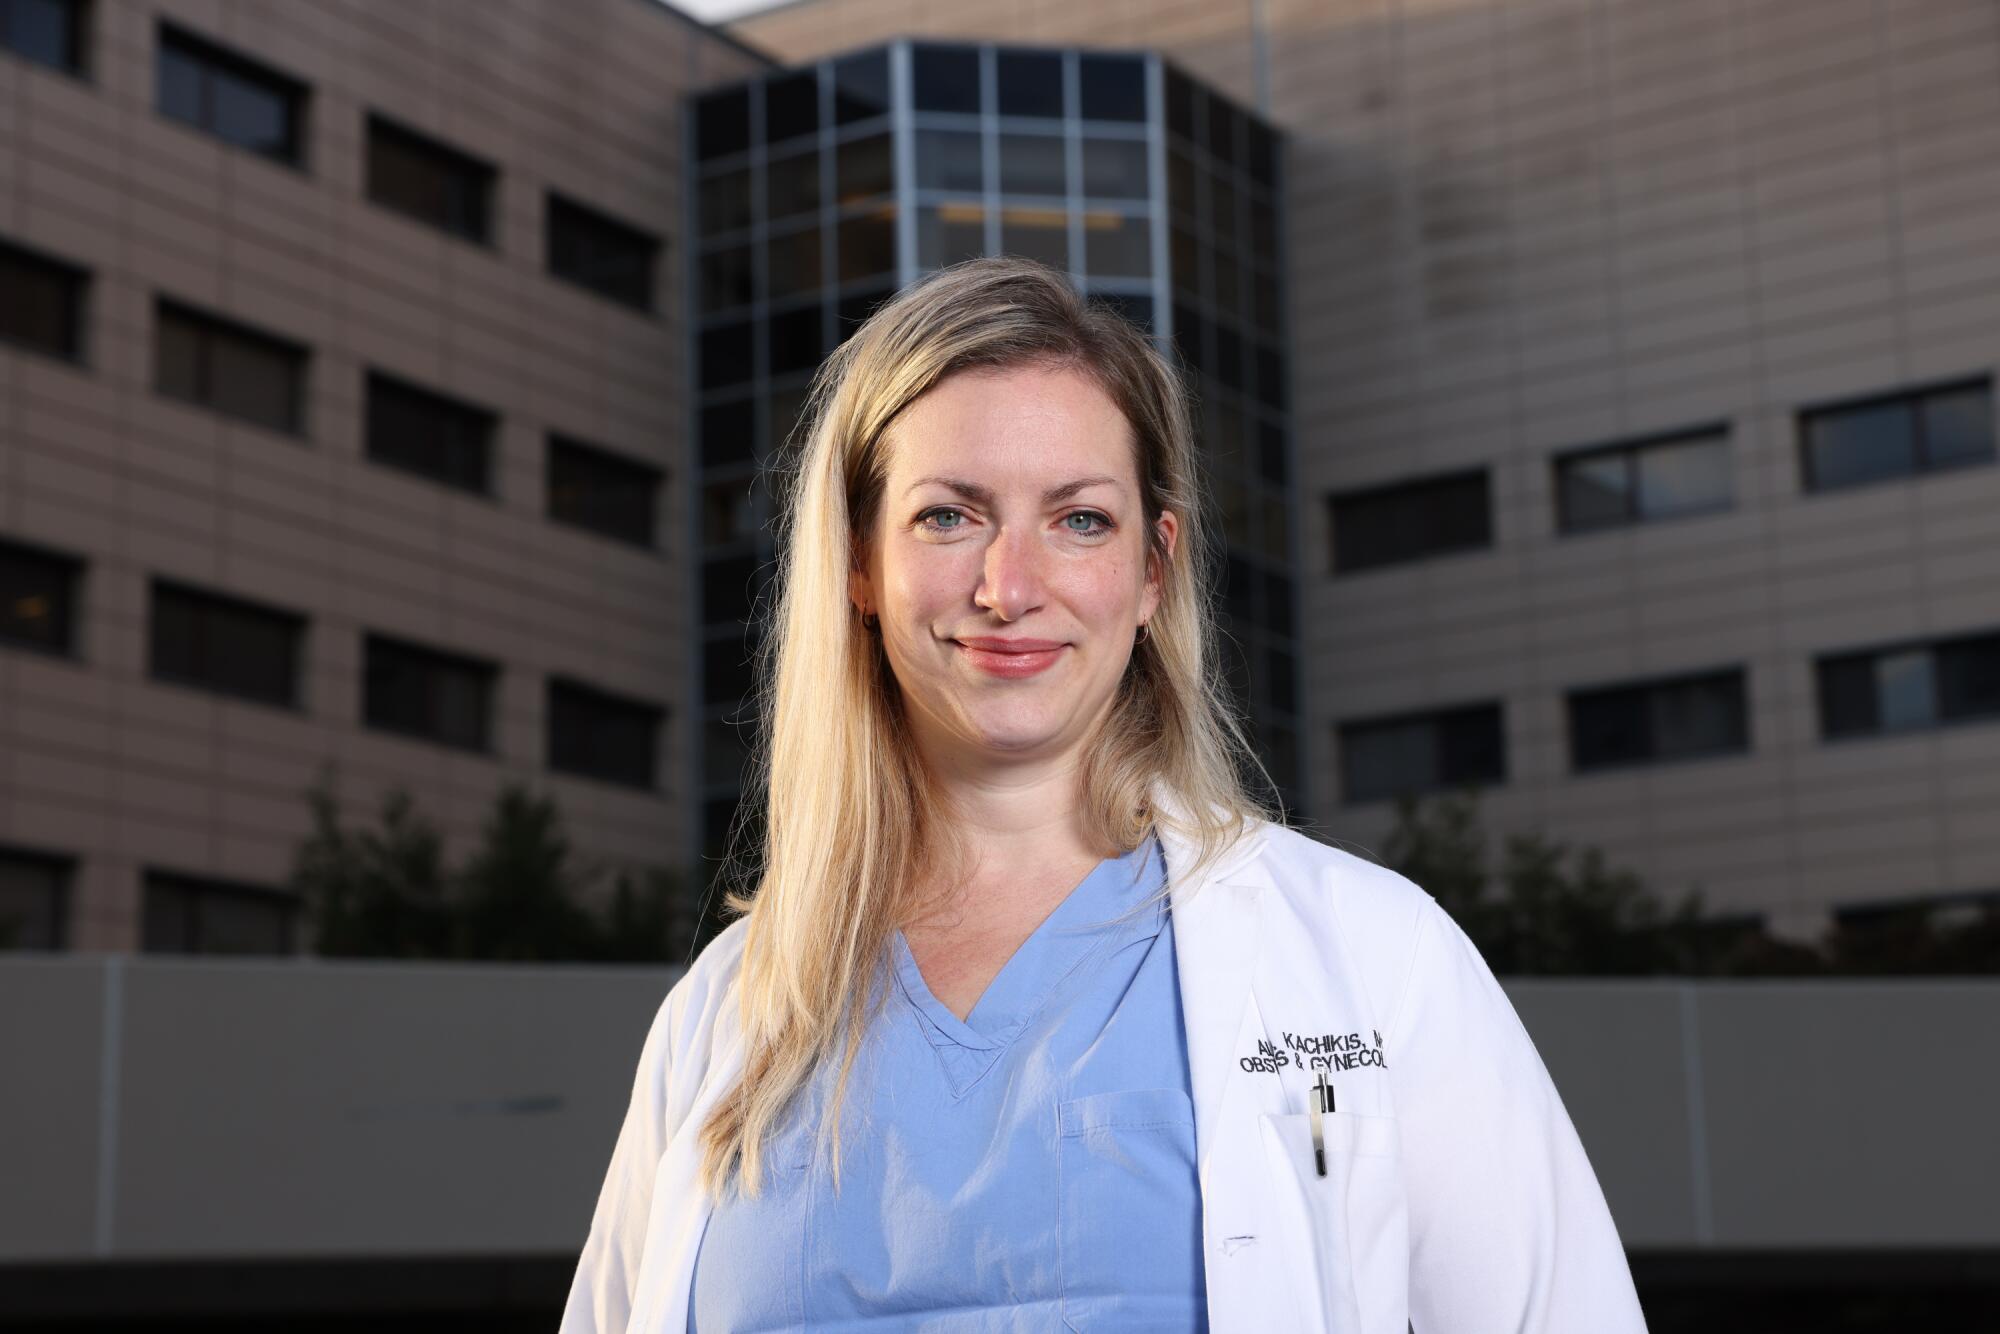 Dr. Alisa Kachikis at the University of Washington Medical Center